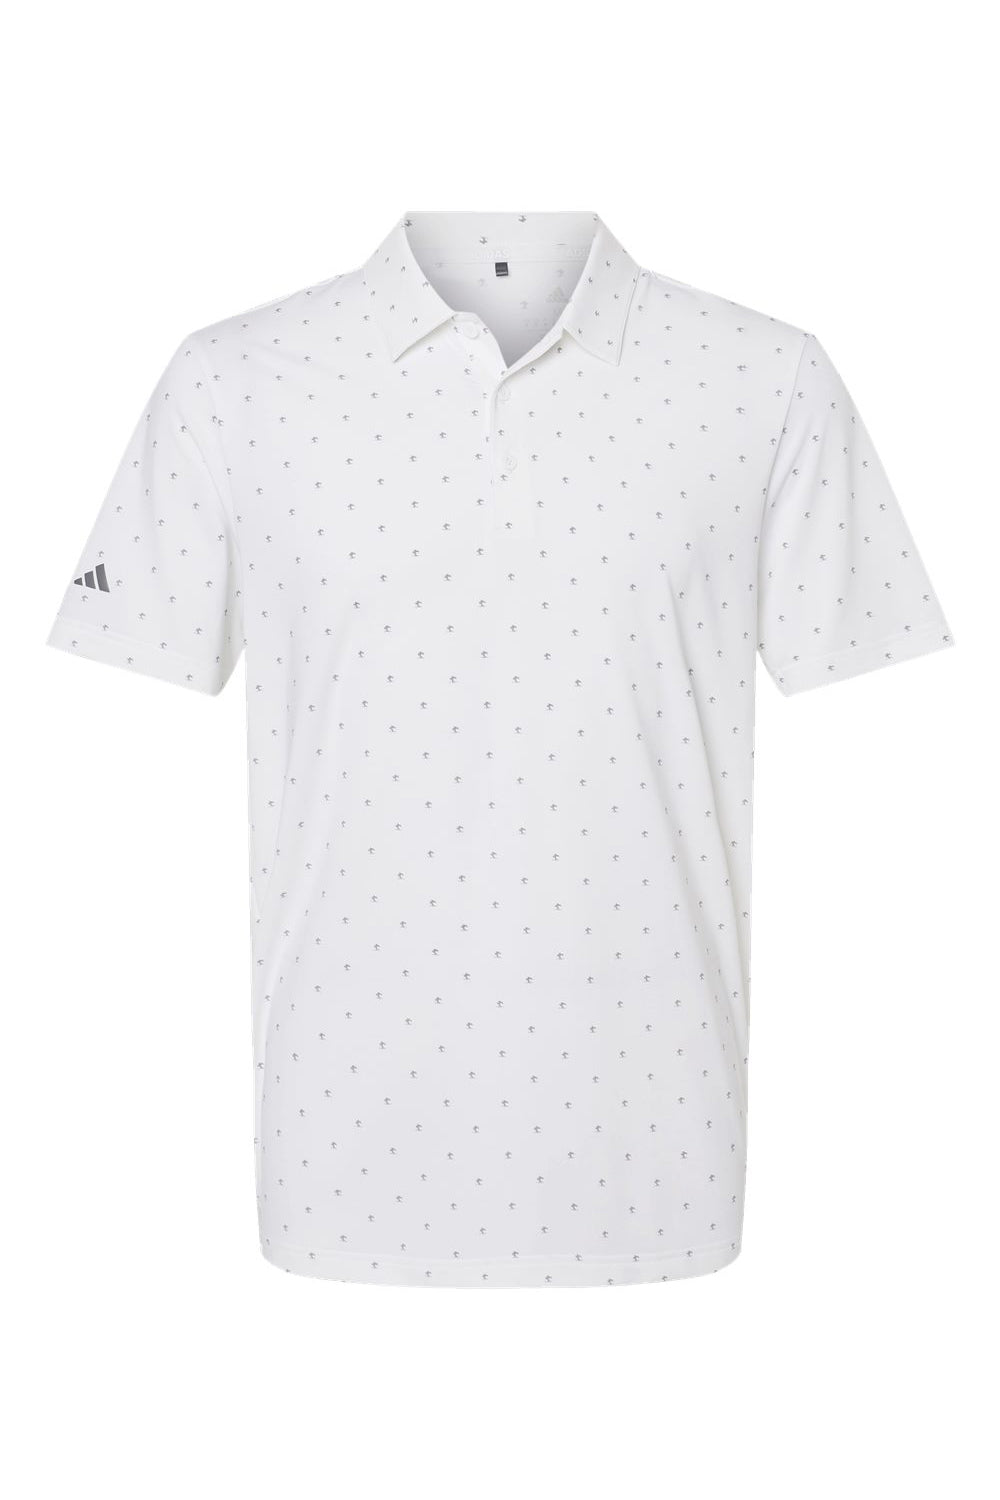 Adidas A574 Mens Pine Tree Short Sleeve Polo Shirt White/Grey Flat Front